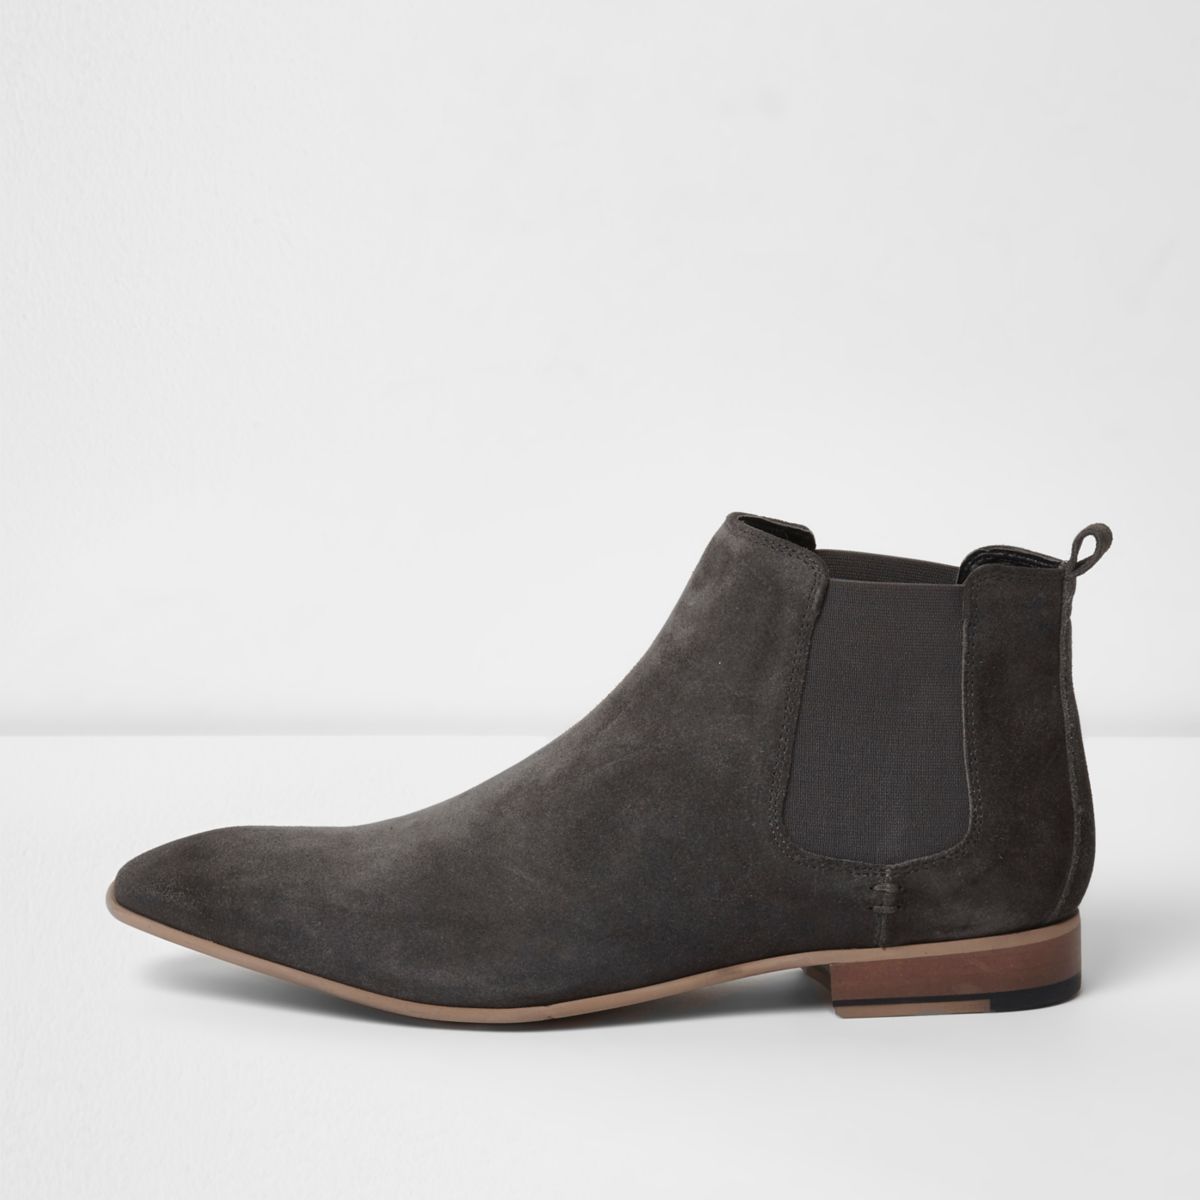 Grey suede chelsea boots - Boots - Shoes & Boots - men